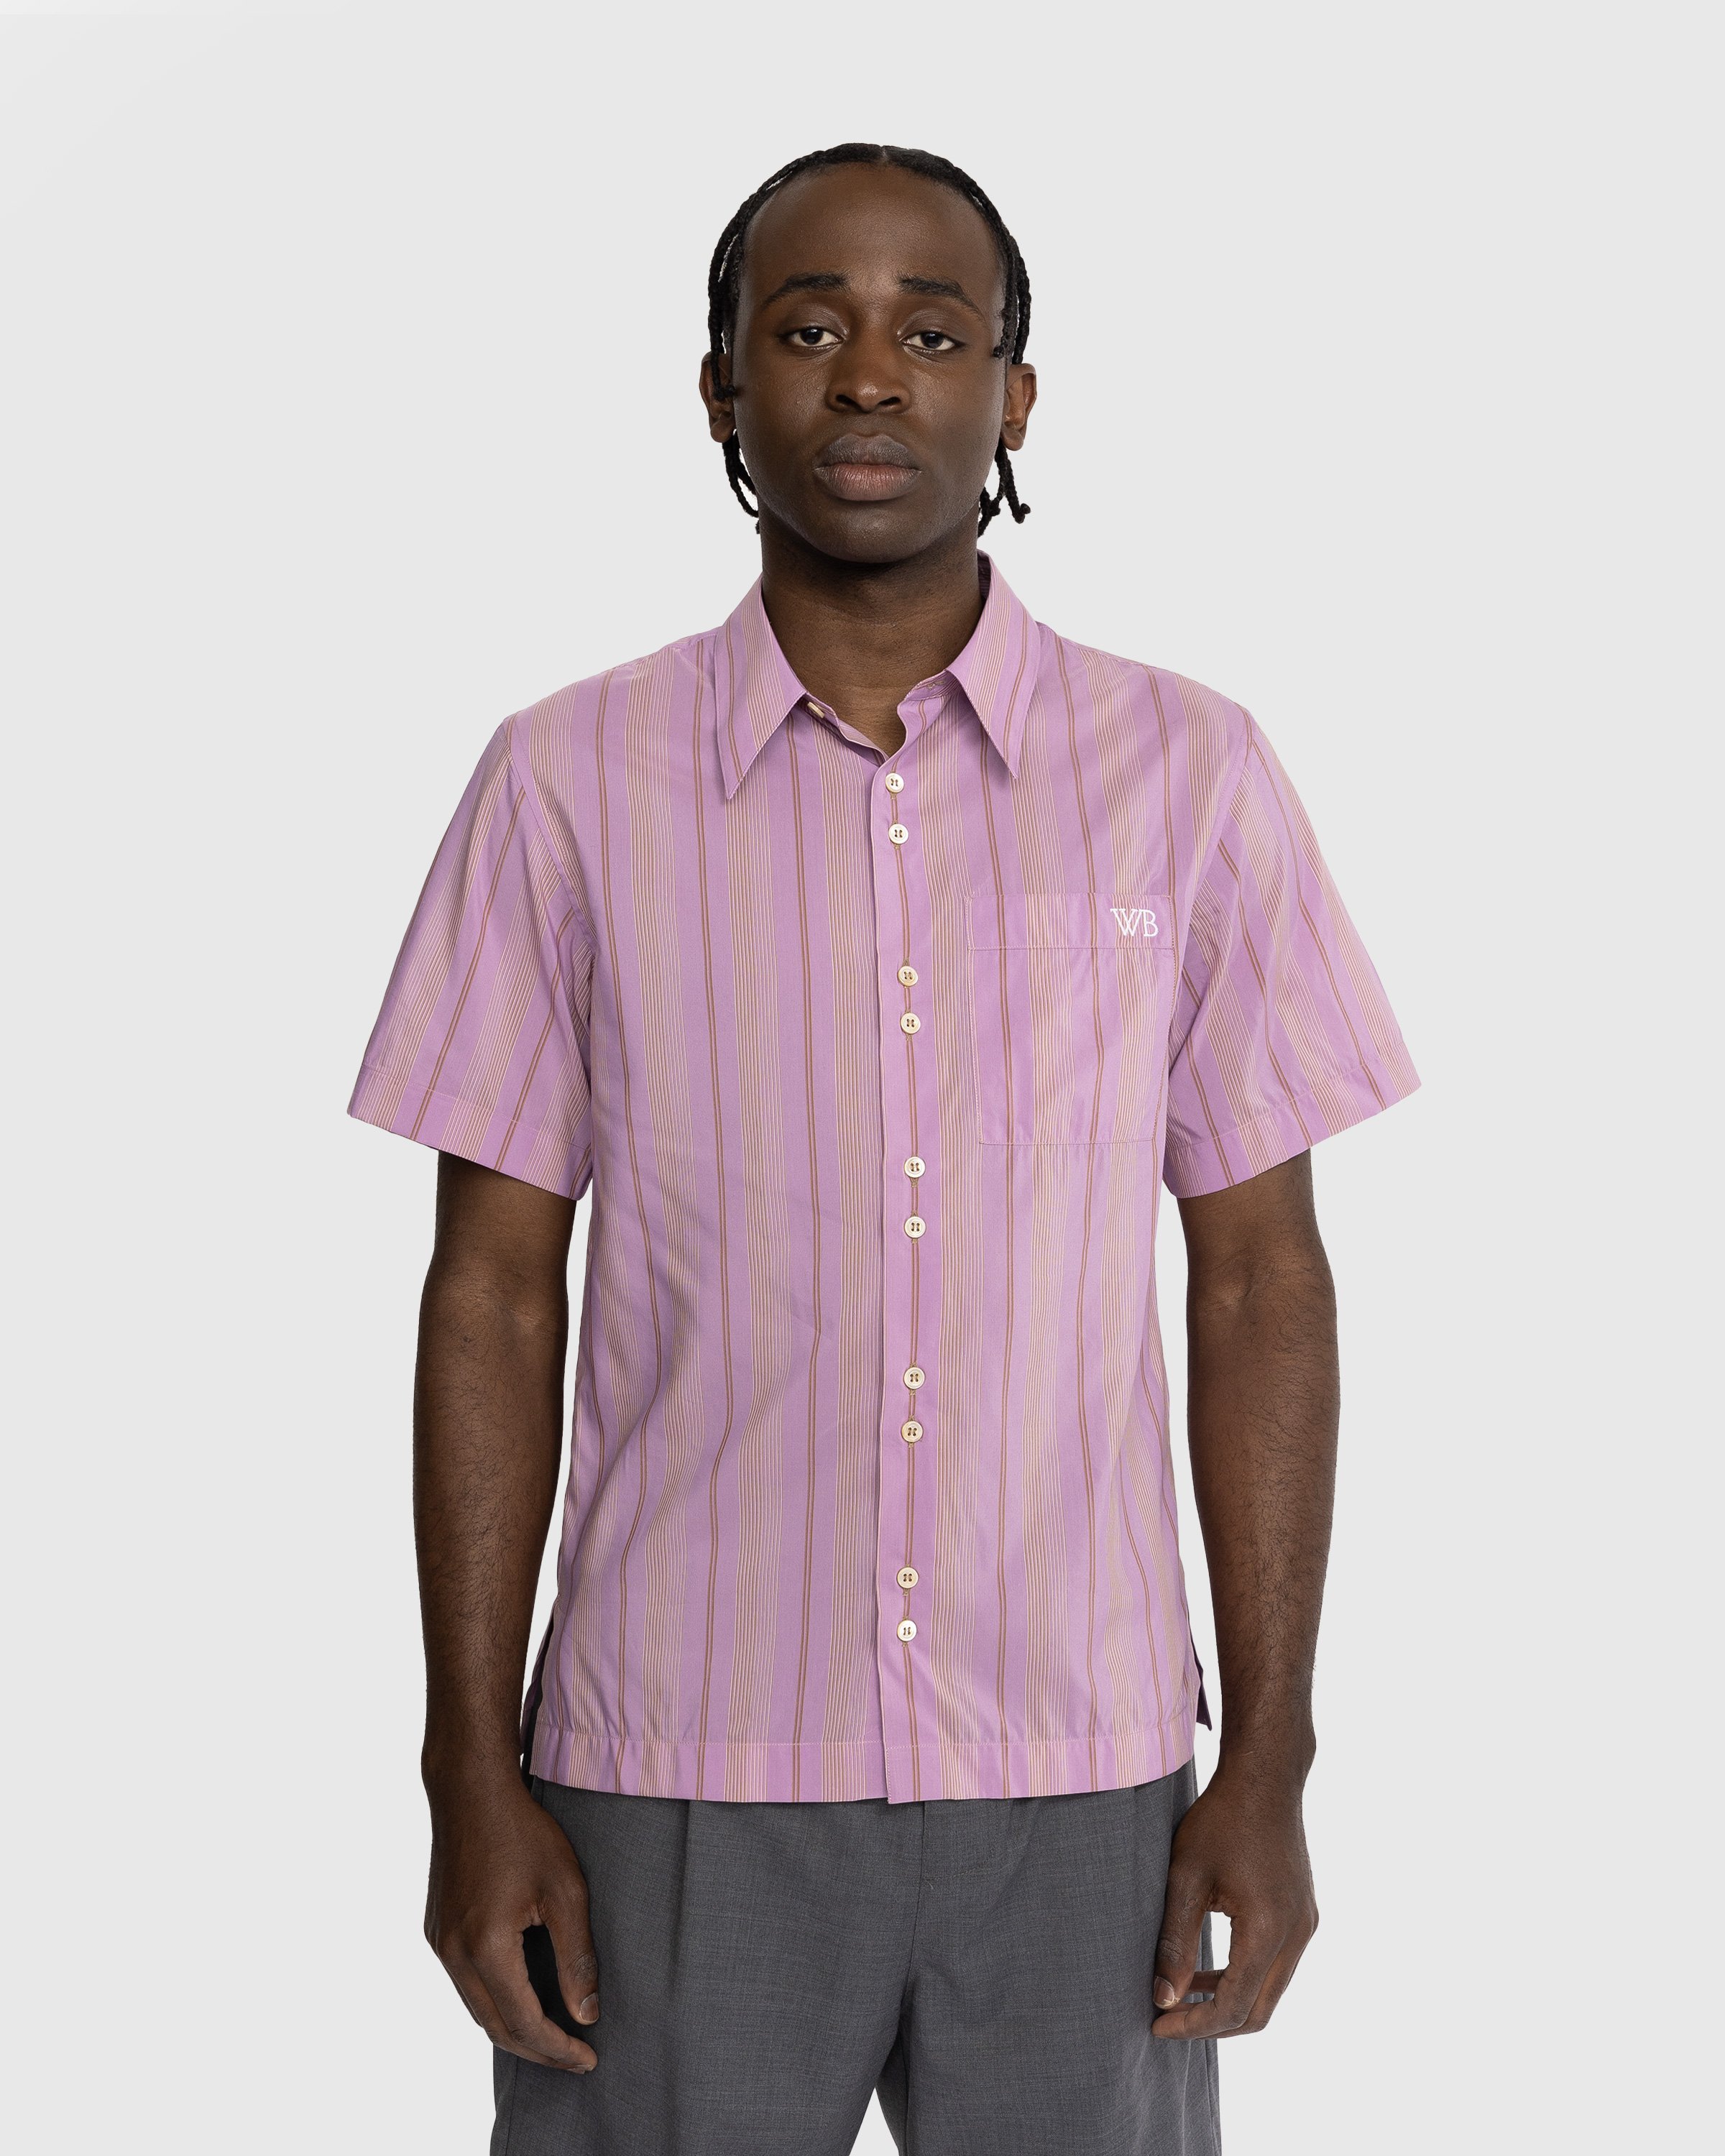 Wales Bonner - Rhythm Striped Shirt Pink - Clothing - Pink - Image 2